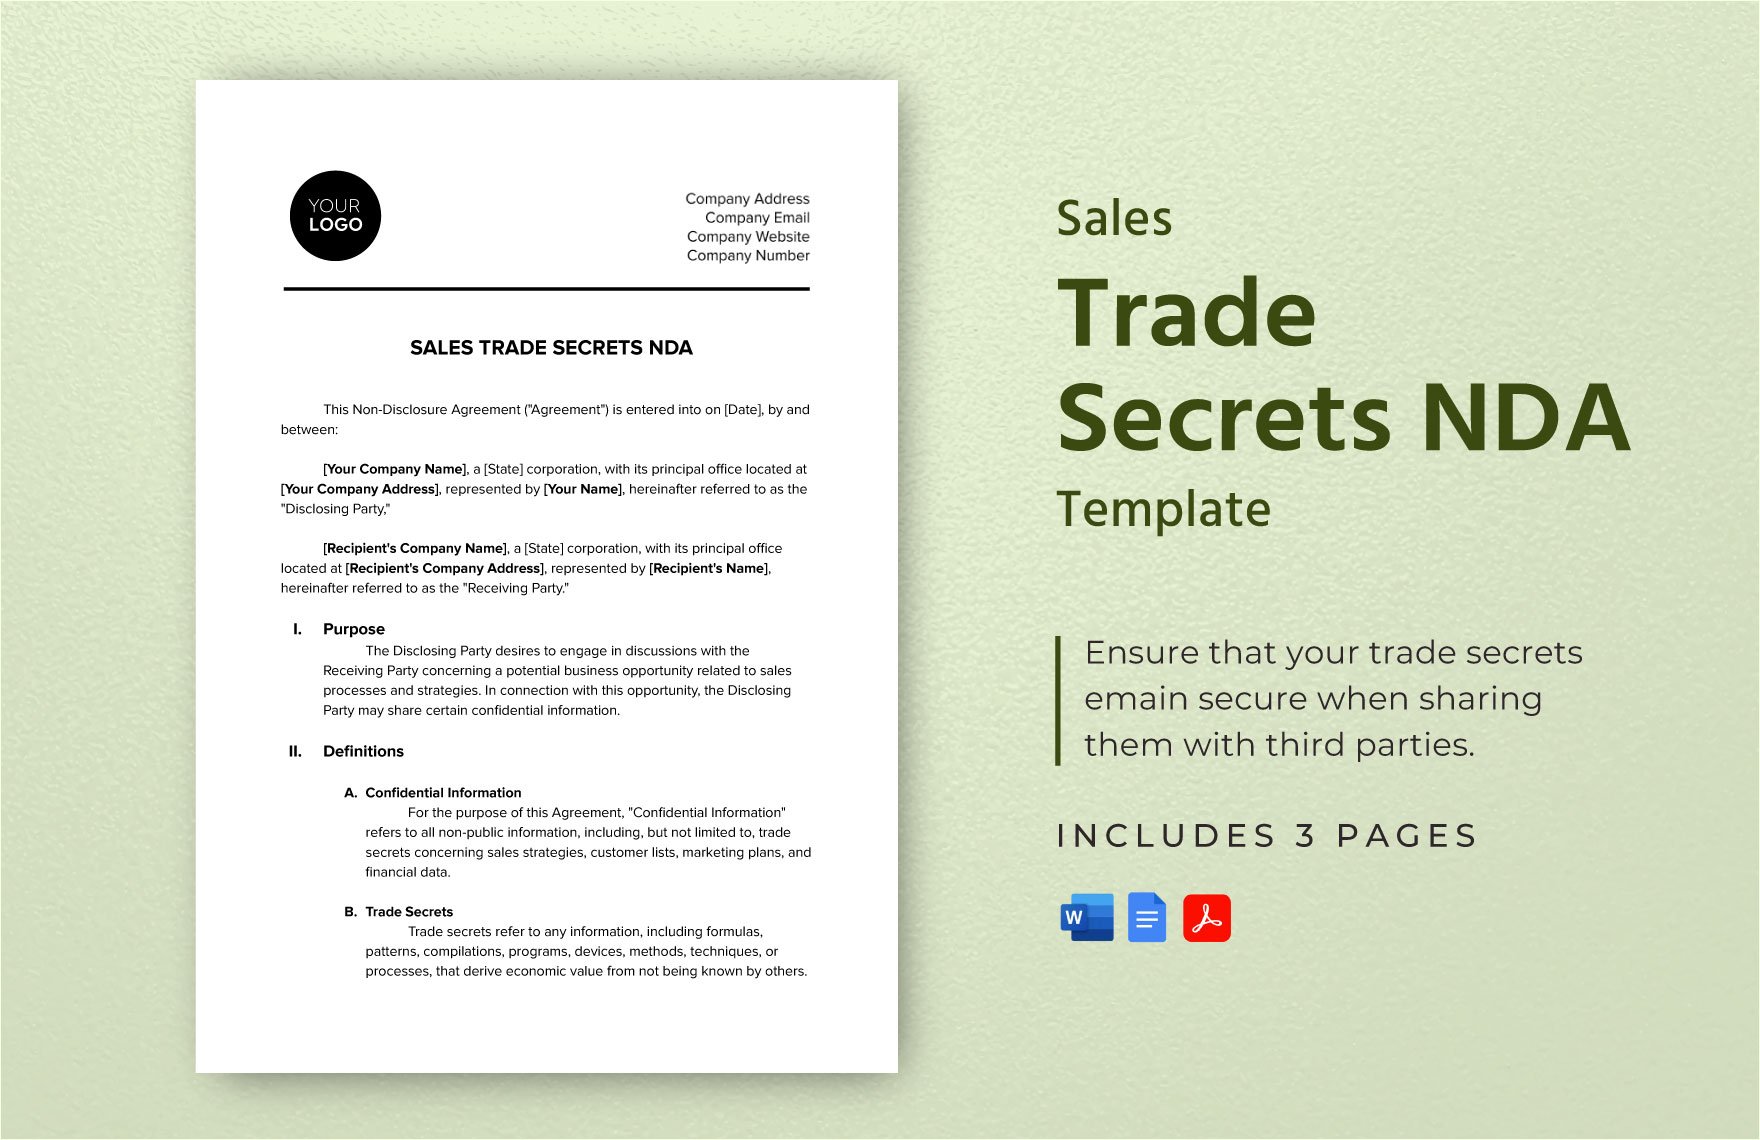 Sales Trade Secrets NDA Template in Word, Google Docs, PDF